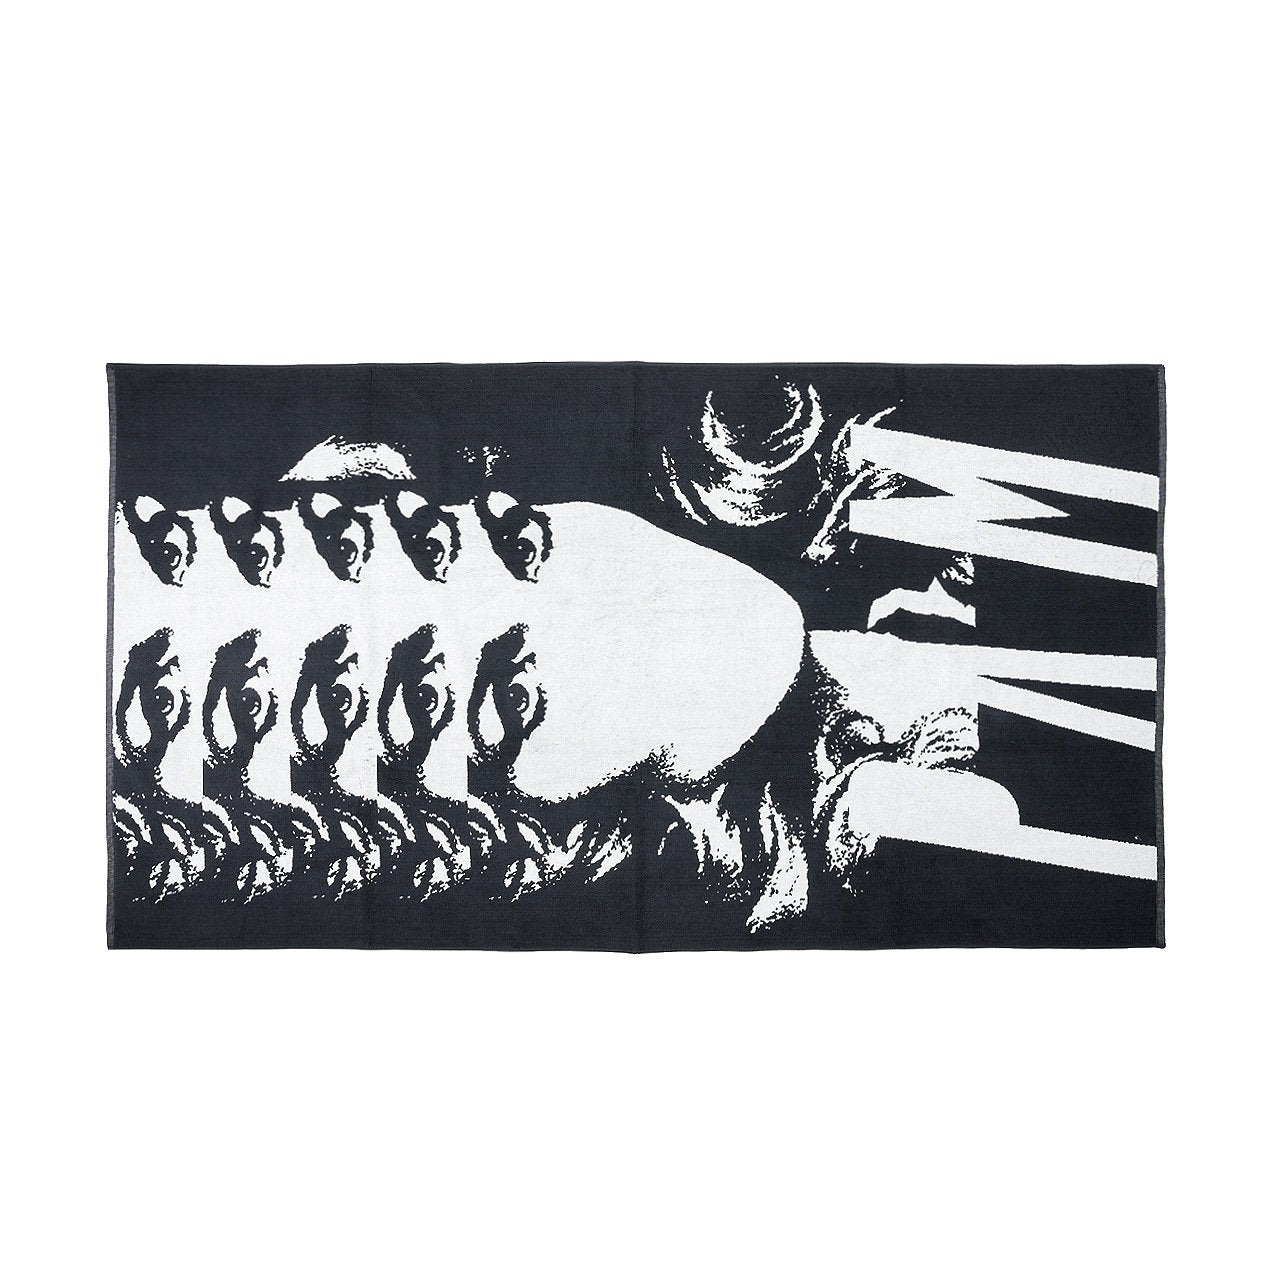 perks and mini x-perience handmaiden towel (black / white) - 9771-bw - a.plus - Image - 1